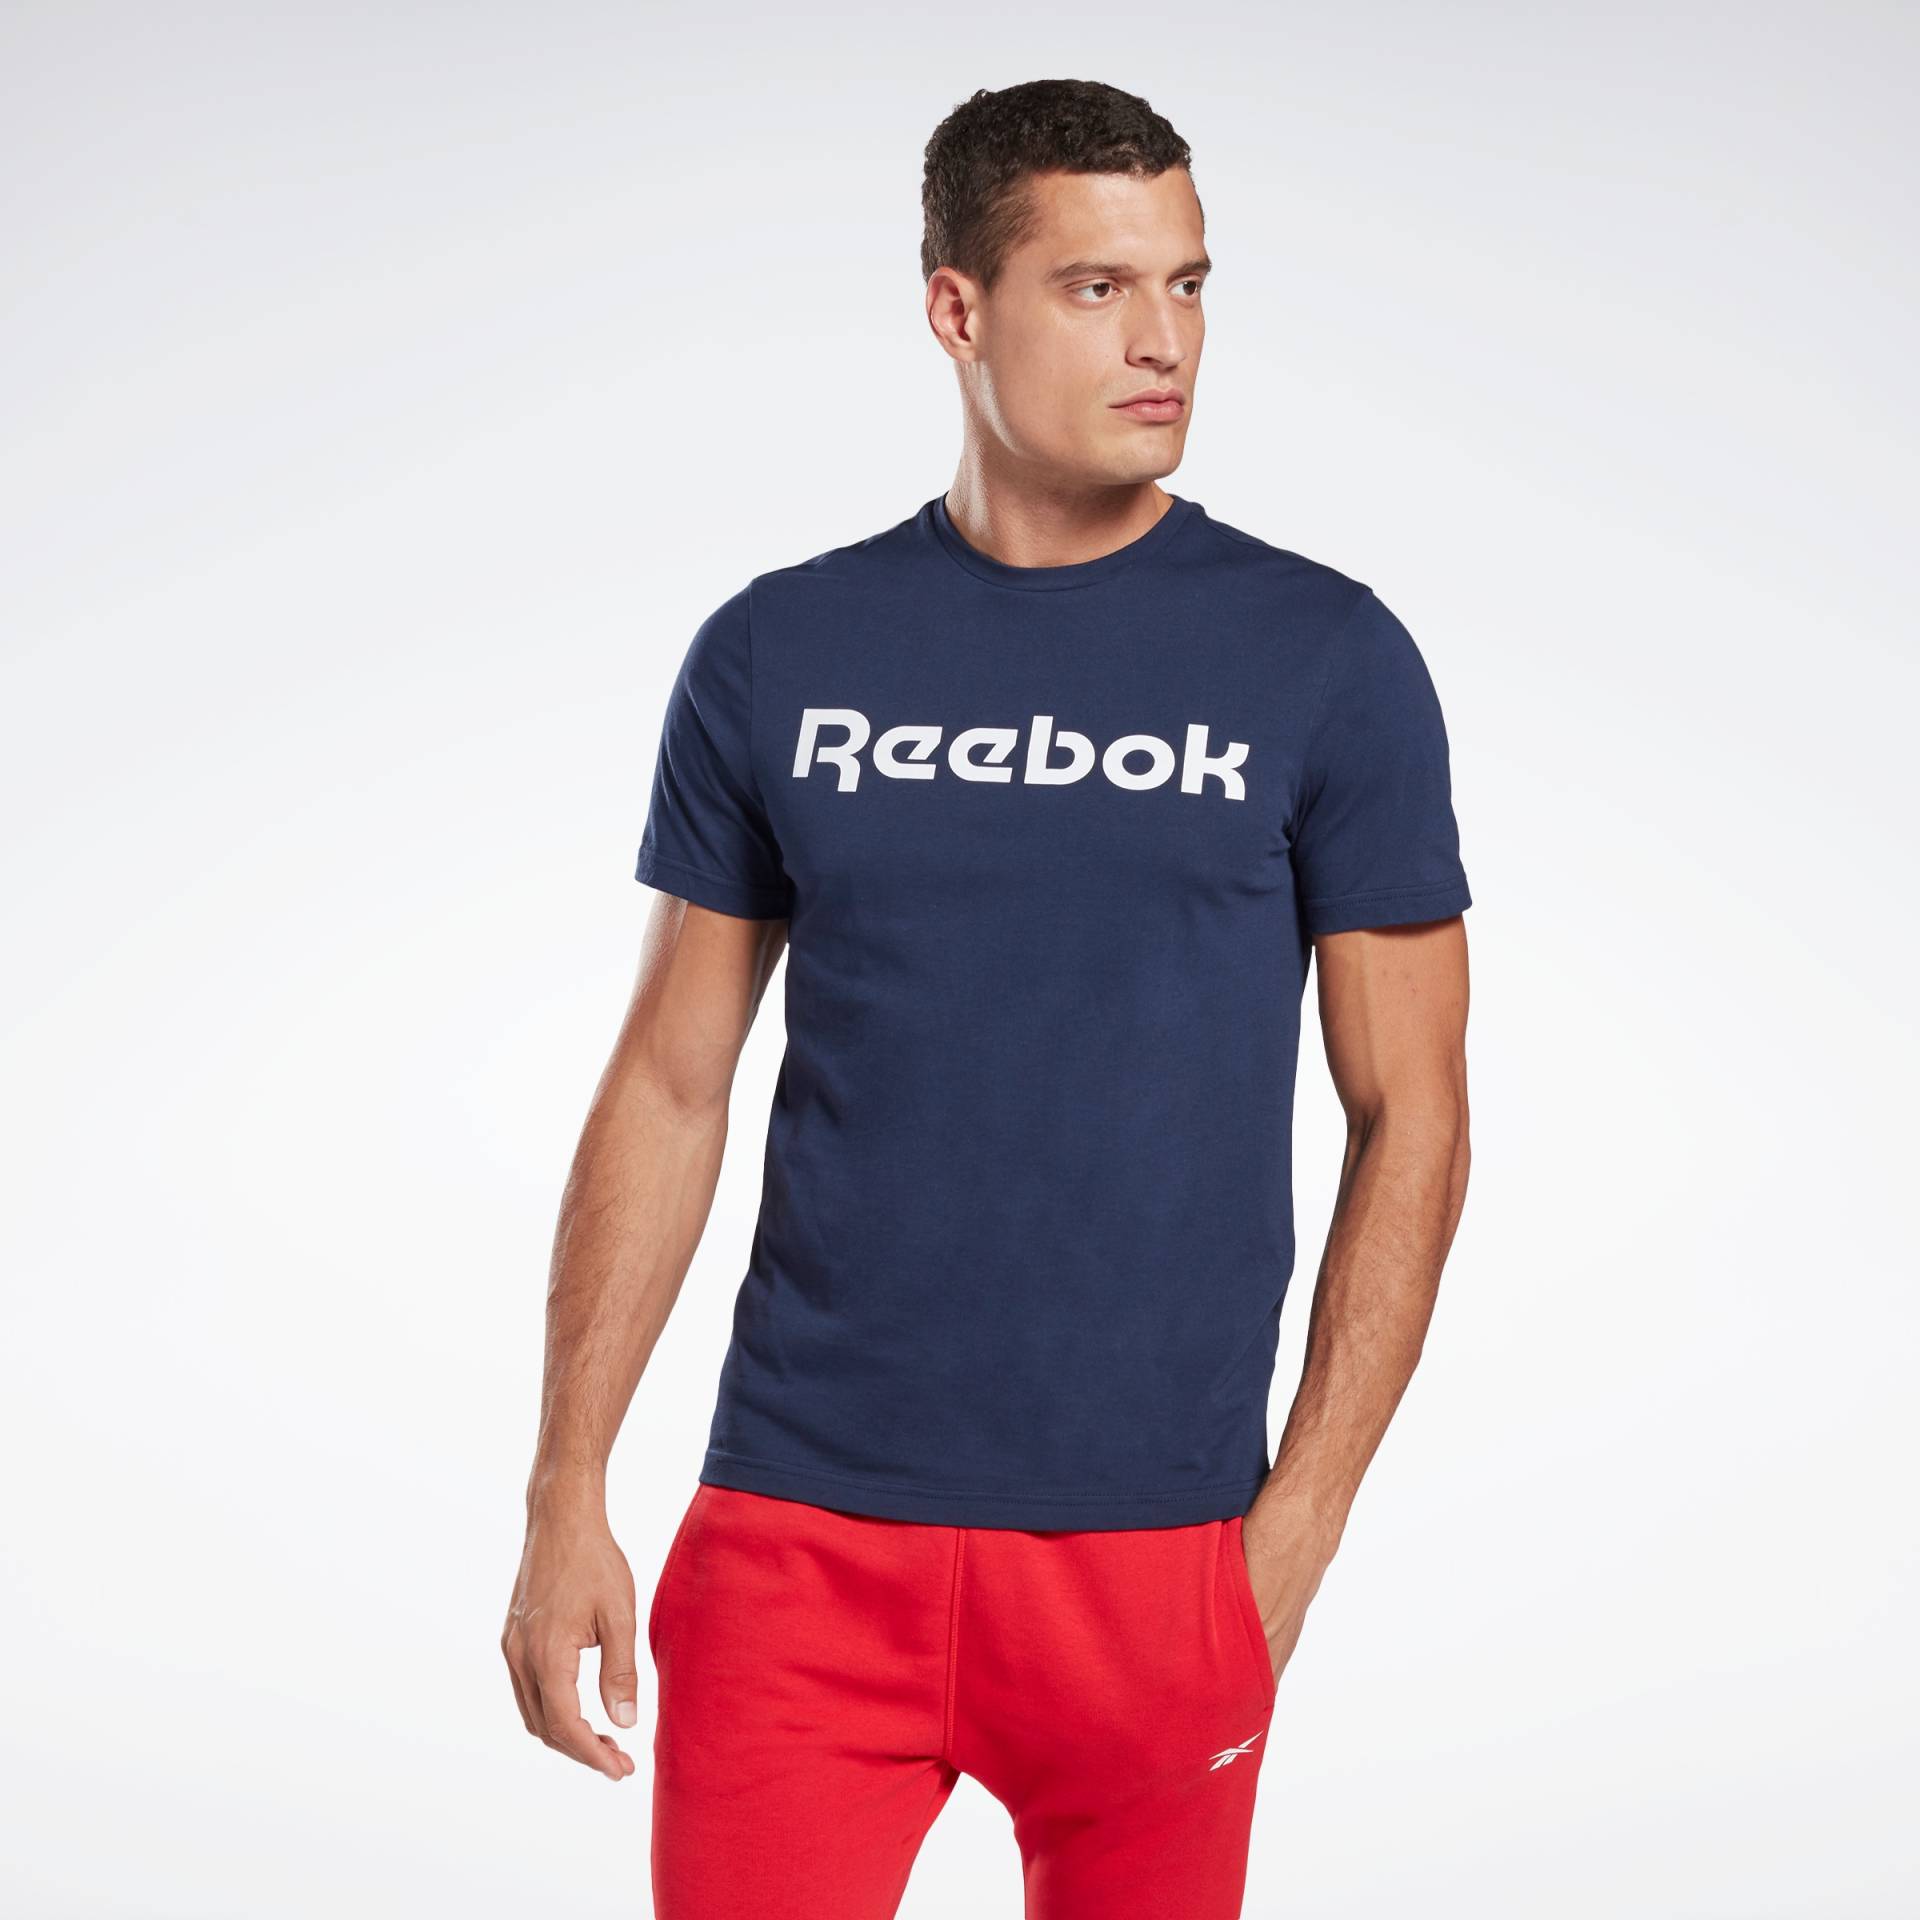 Reebok T-Shirt »GRAPHIC SERIES LINEAR LOGO« von Reebok